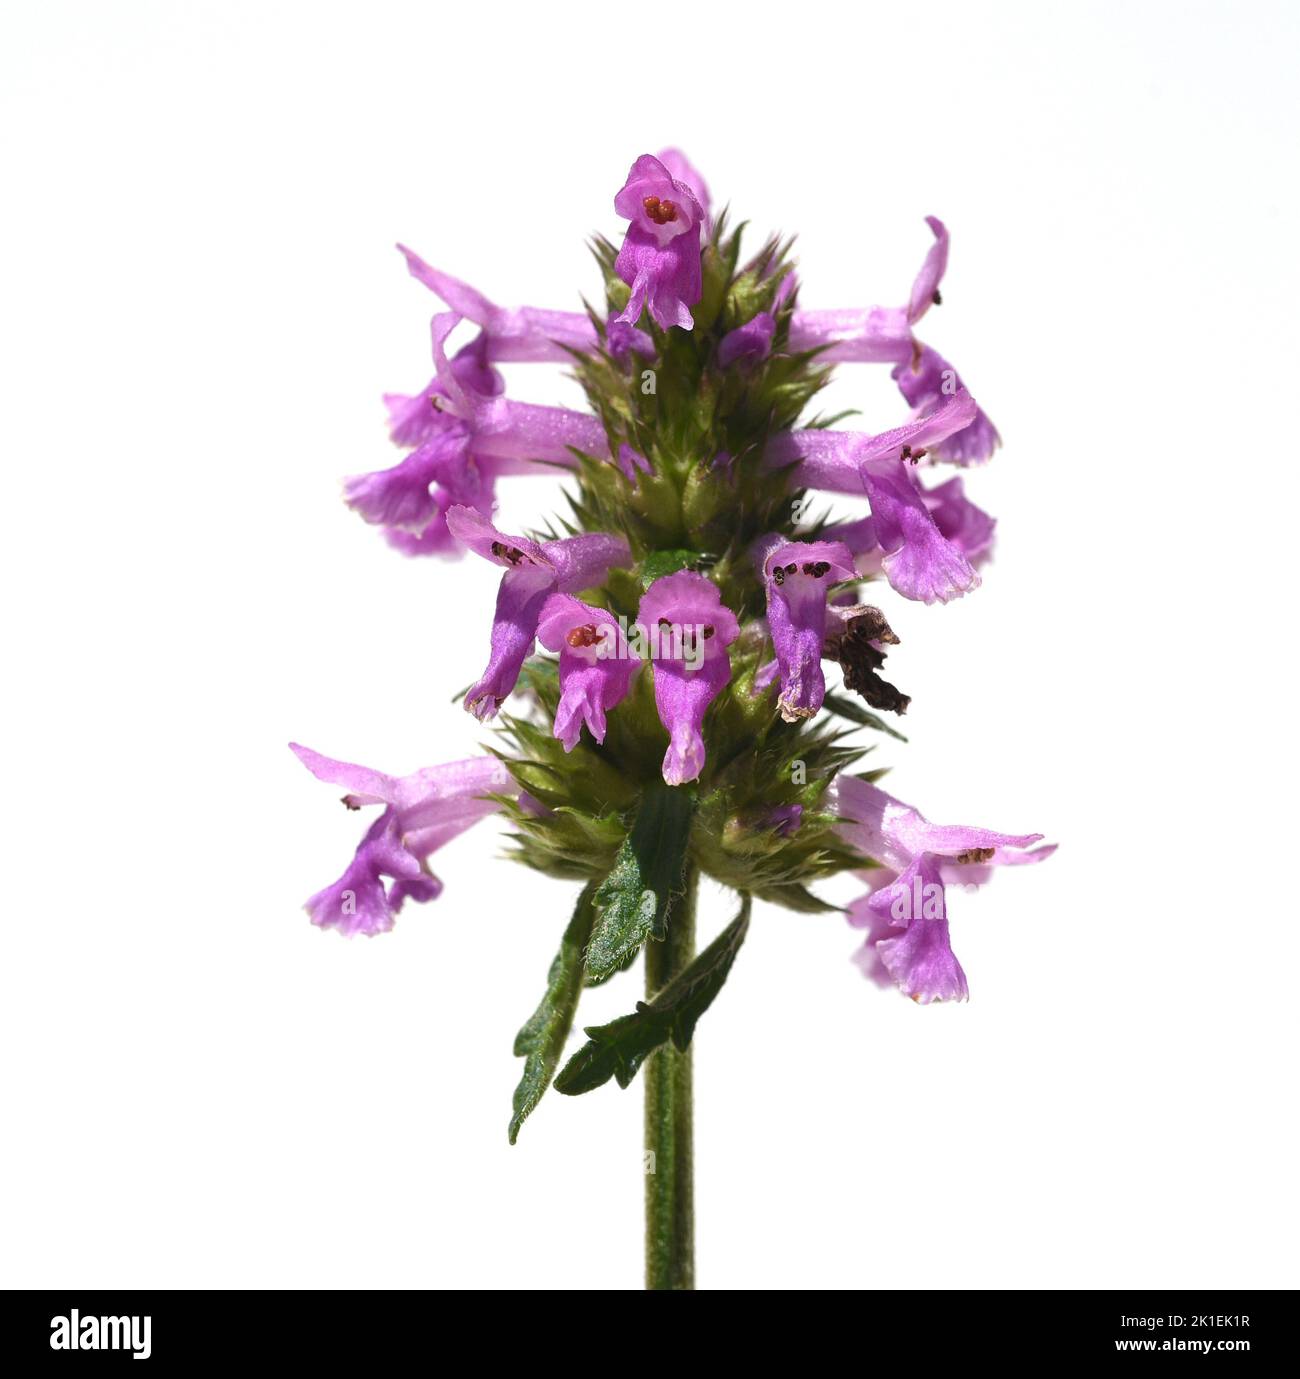 Ziest, Stachys officinalis è un'importante pianta medicinale con fiori viola. Foto Stock